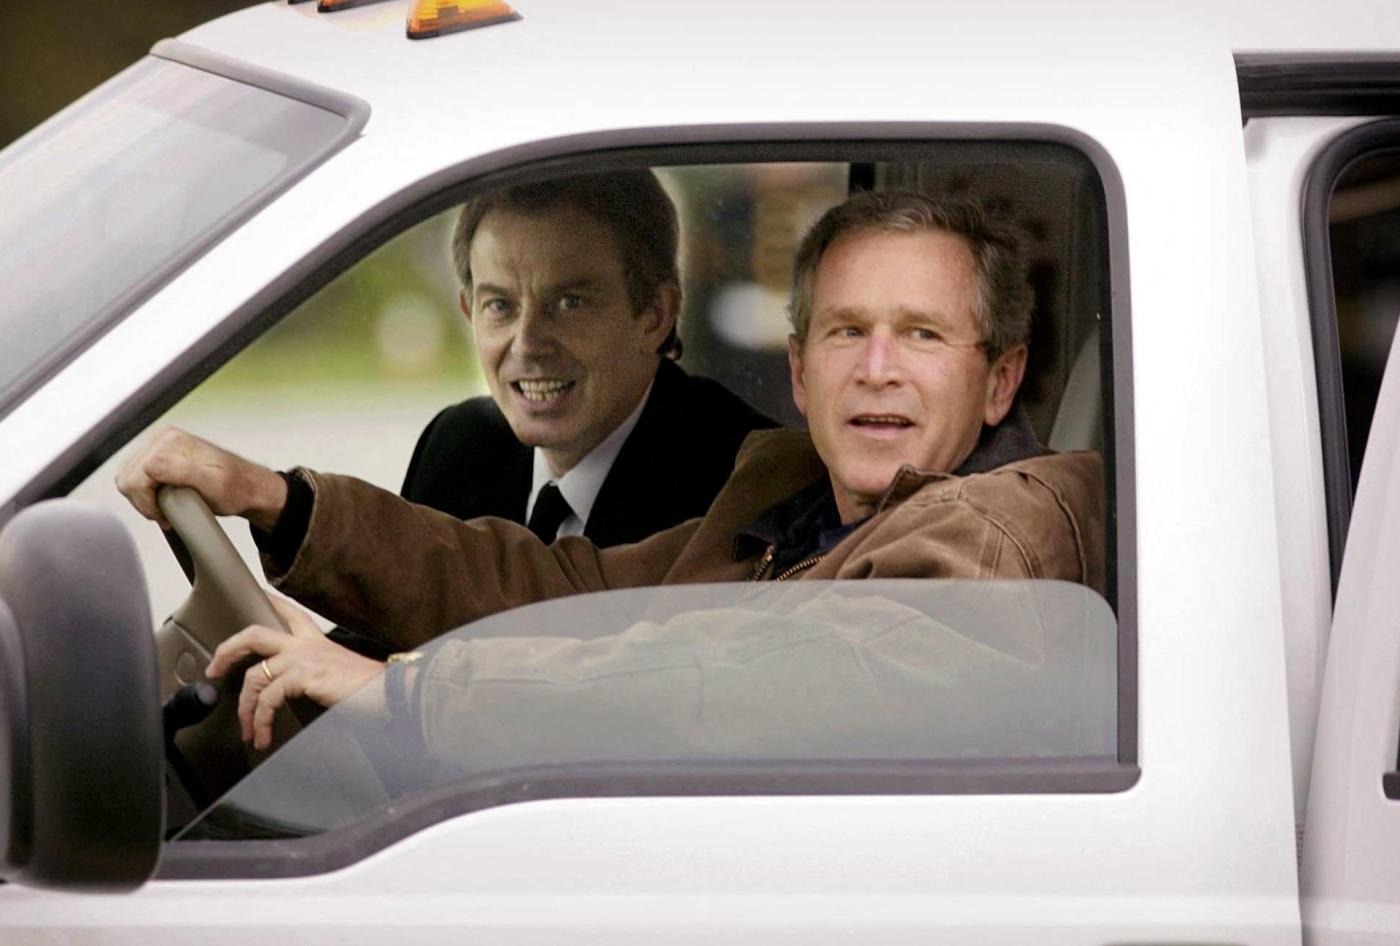 Iraq war: Secret memo reveals Bush-Blair plans to topple Saddam Hussein